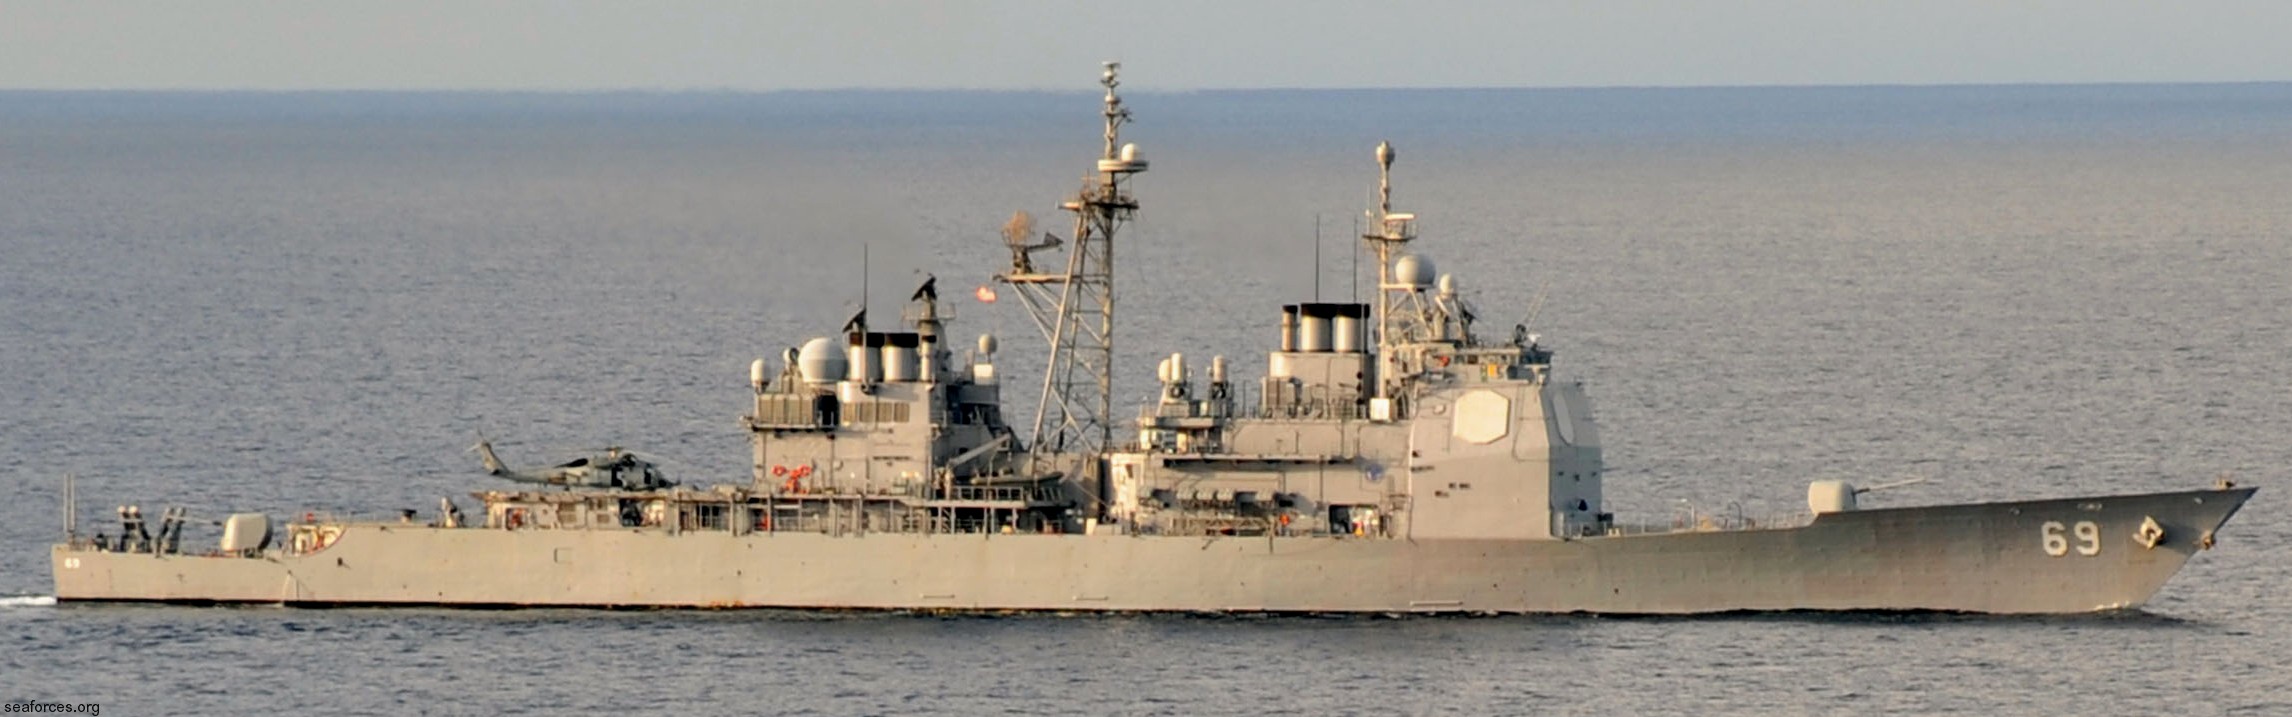 cg-69 uss vicksburg ticonderoga class guided missile cruiser us navy 27